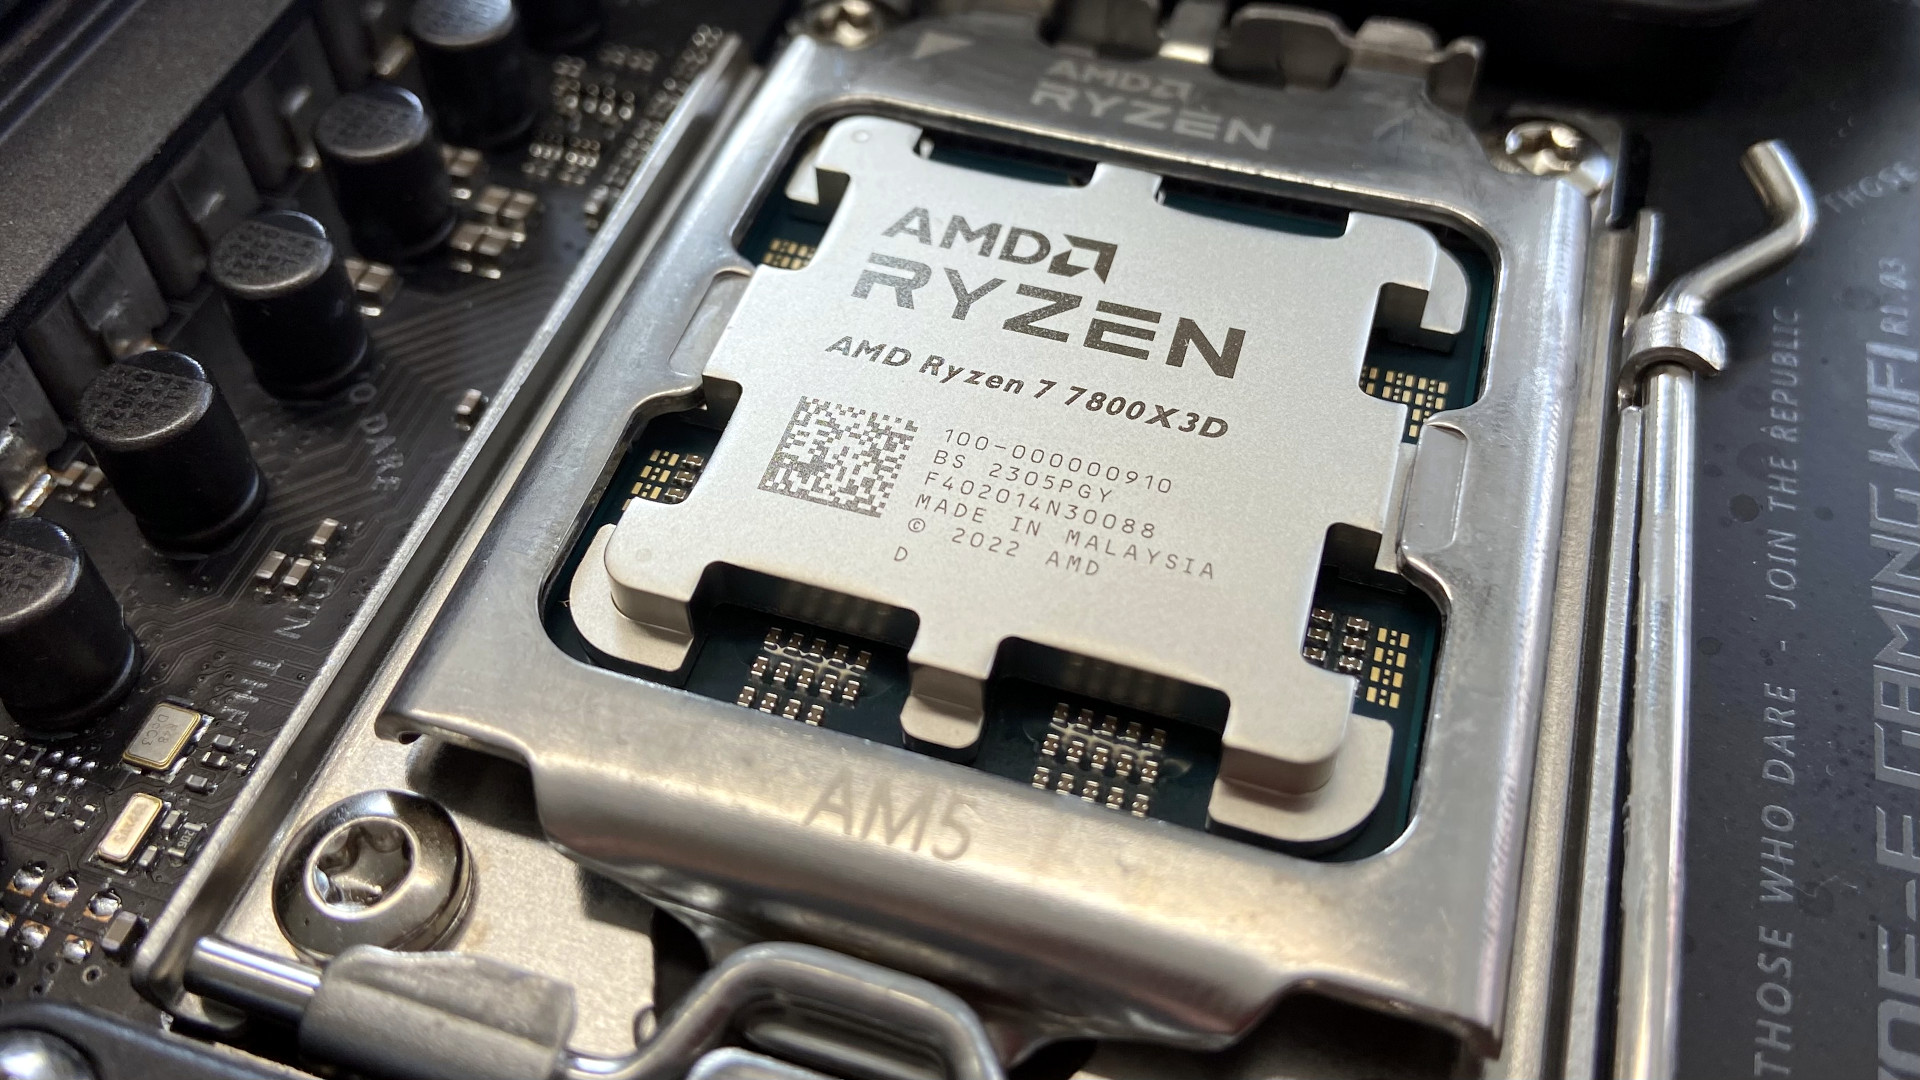 Amd ryzen 7 7800x3d цены. Ryzen 7 7800x. Процессор Ryzen 7800x3d. AMD 7800x3d. I9 14900k.